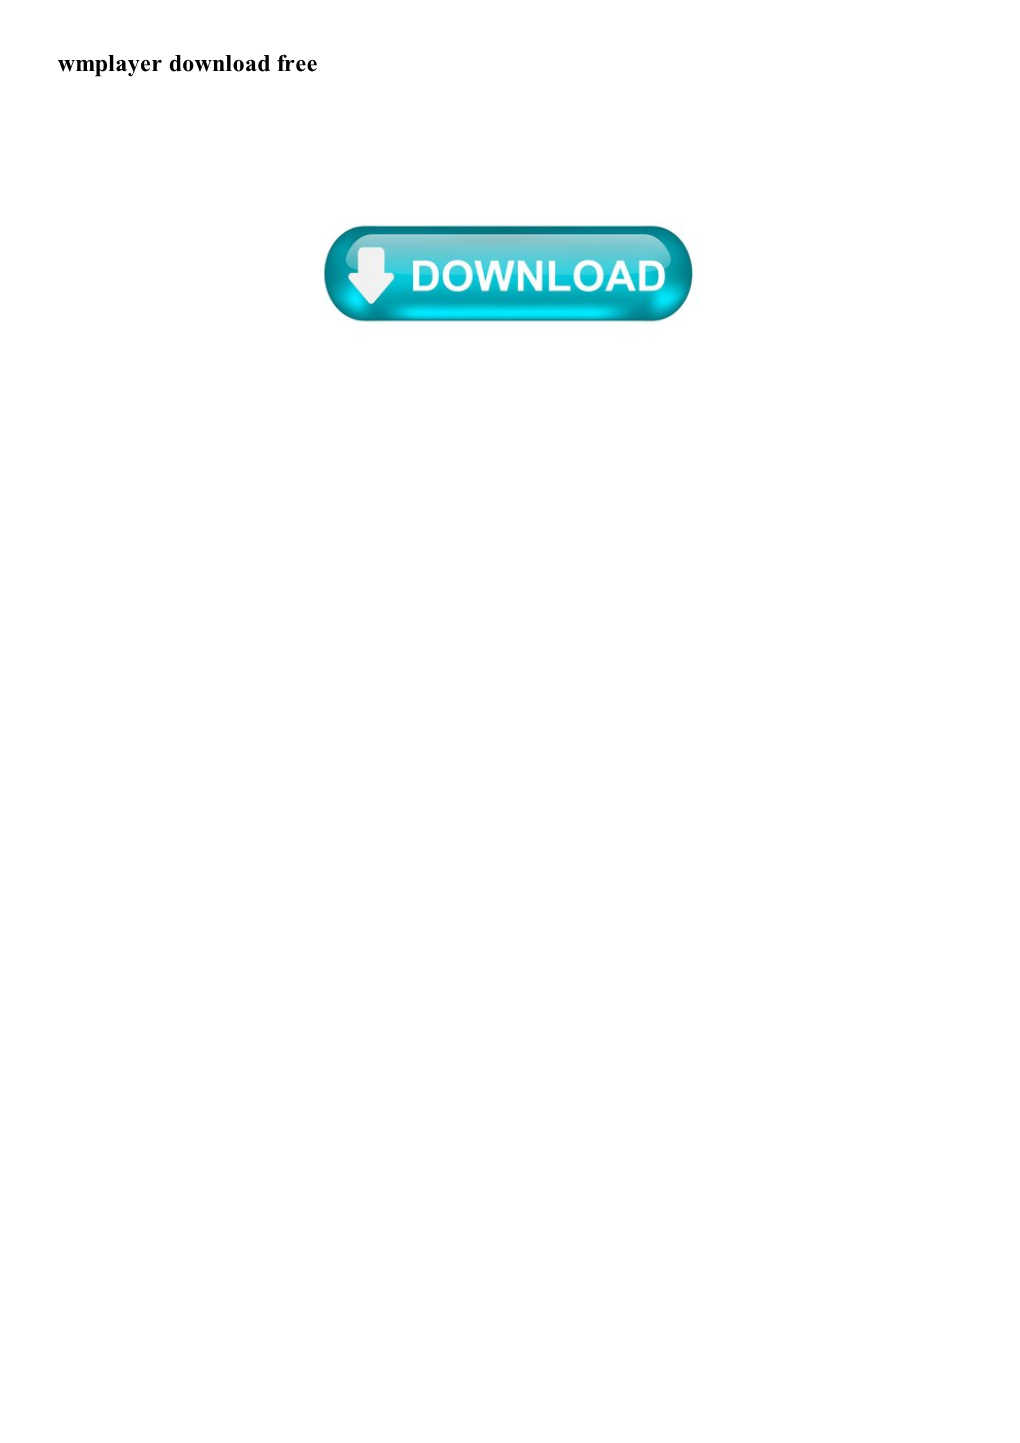 Wmplayer Download Free Windows Media Player